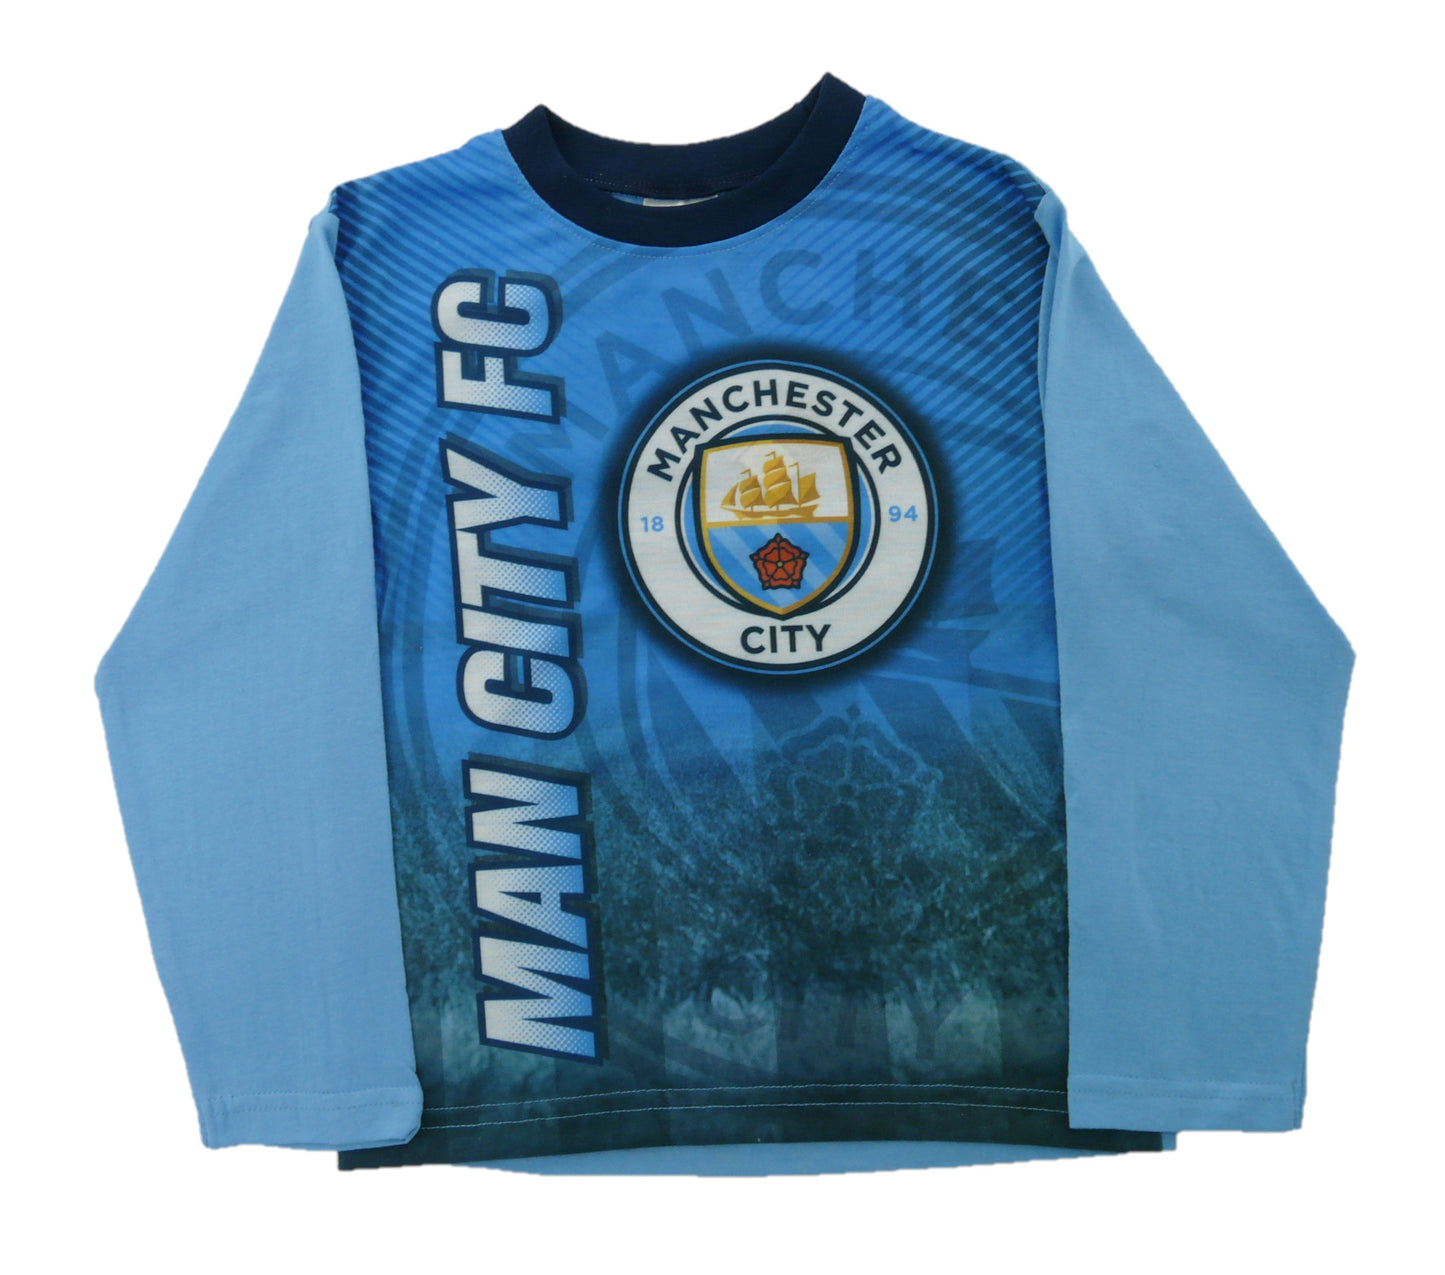 Manchester City Football Club "Man City FC" pyjamas